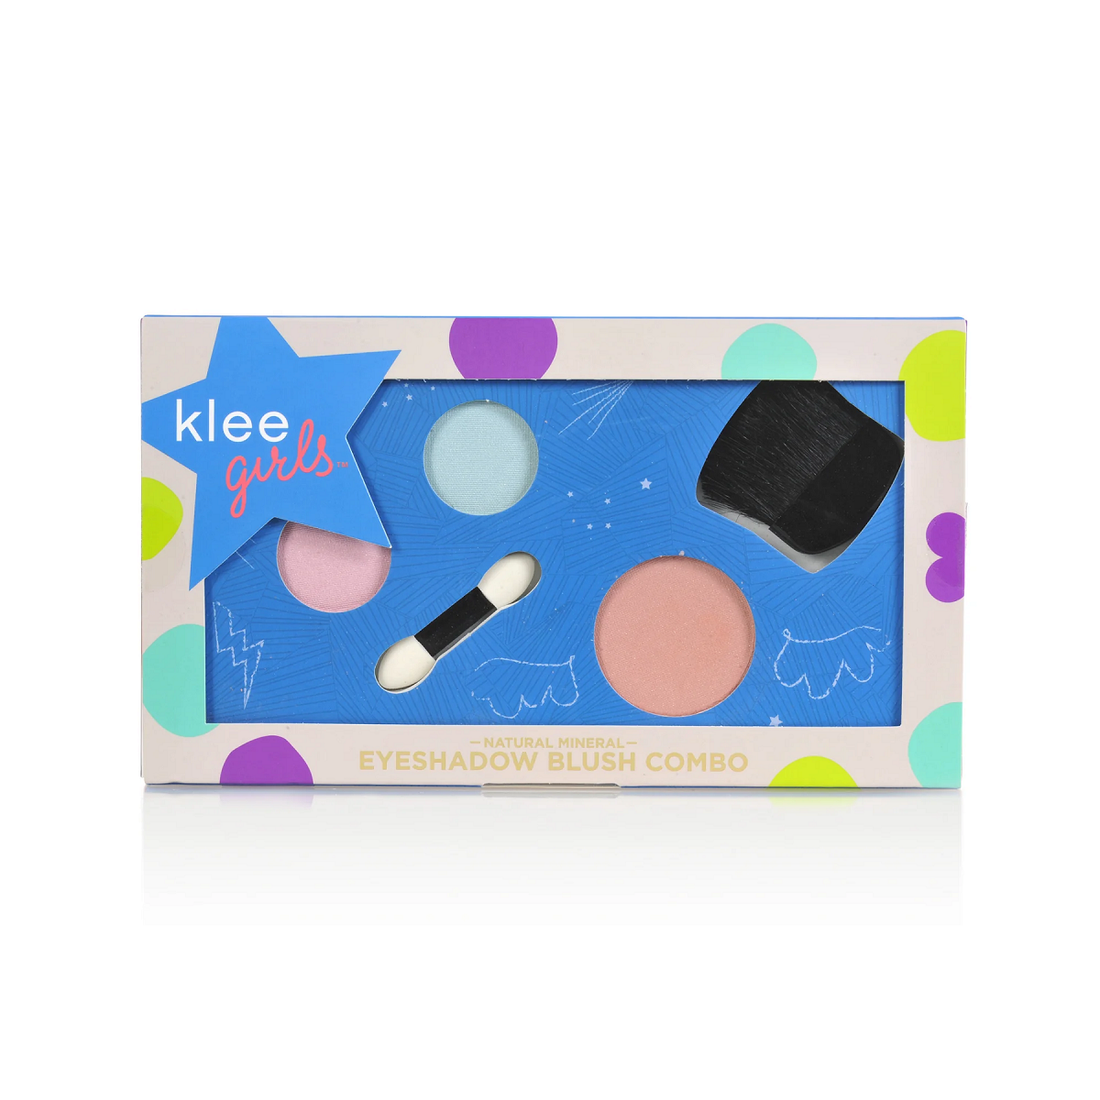 Klee Girls Eyeshadow+Blush Combo Palette (Time Square Flair) 天然礦物雙色眼影+胭脂盤 (粉藍色+粉紅色/裸色)